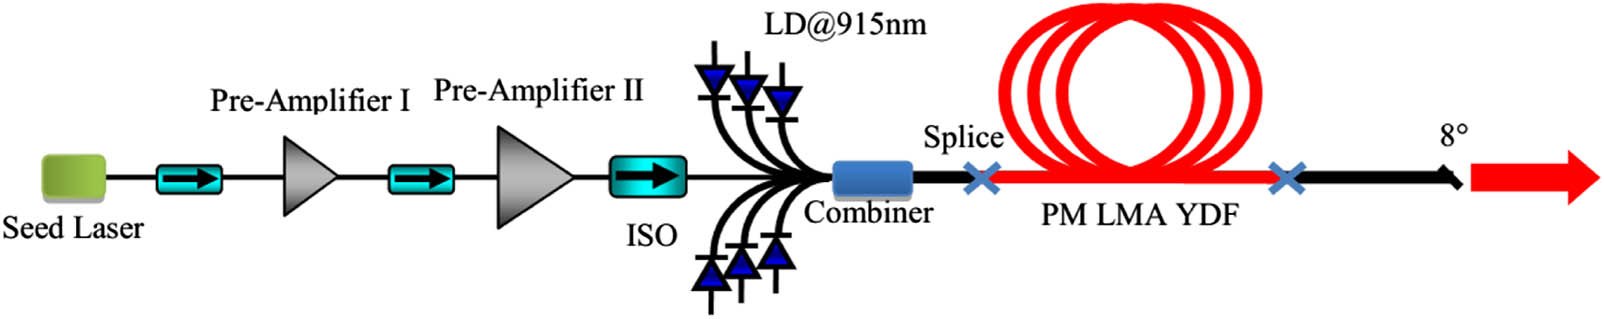 Architecture of the all-fiber PM amplifier.